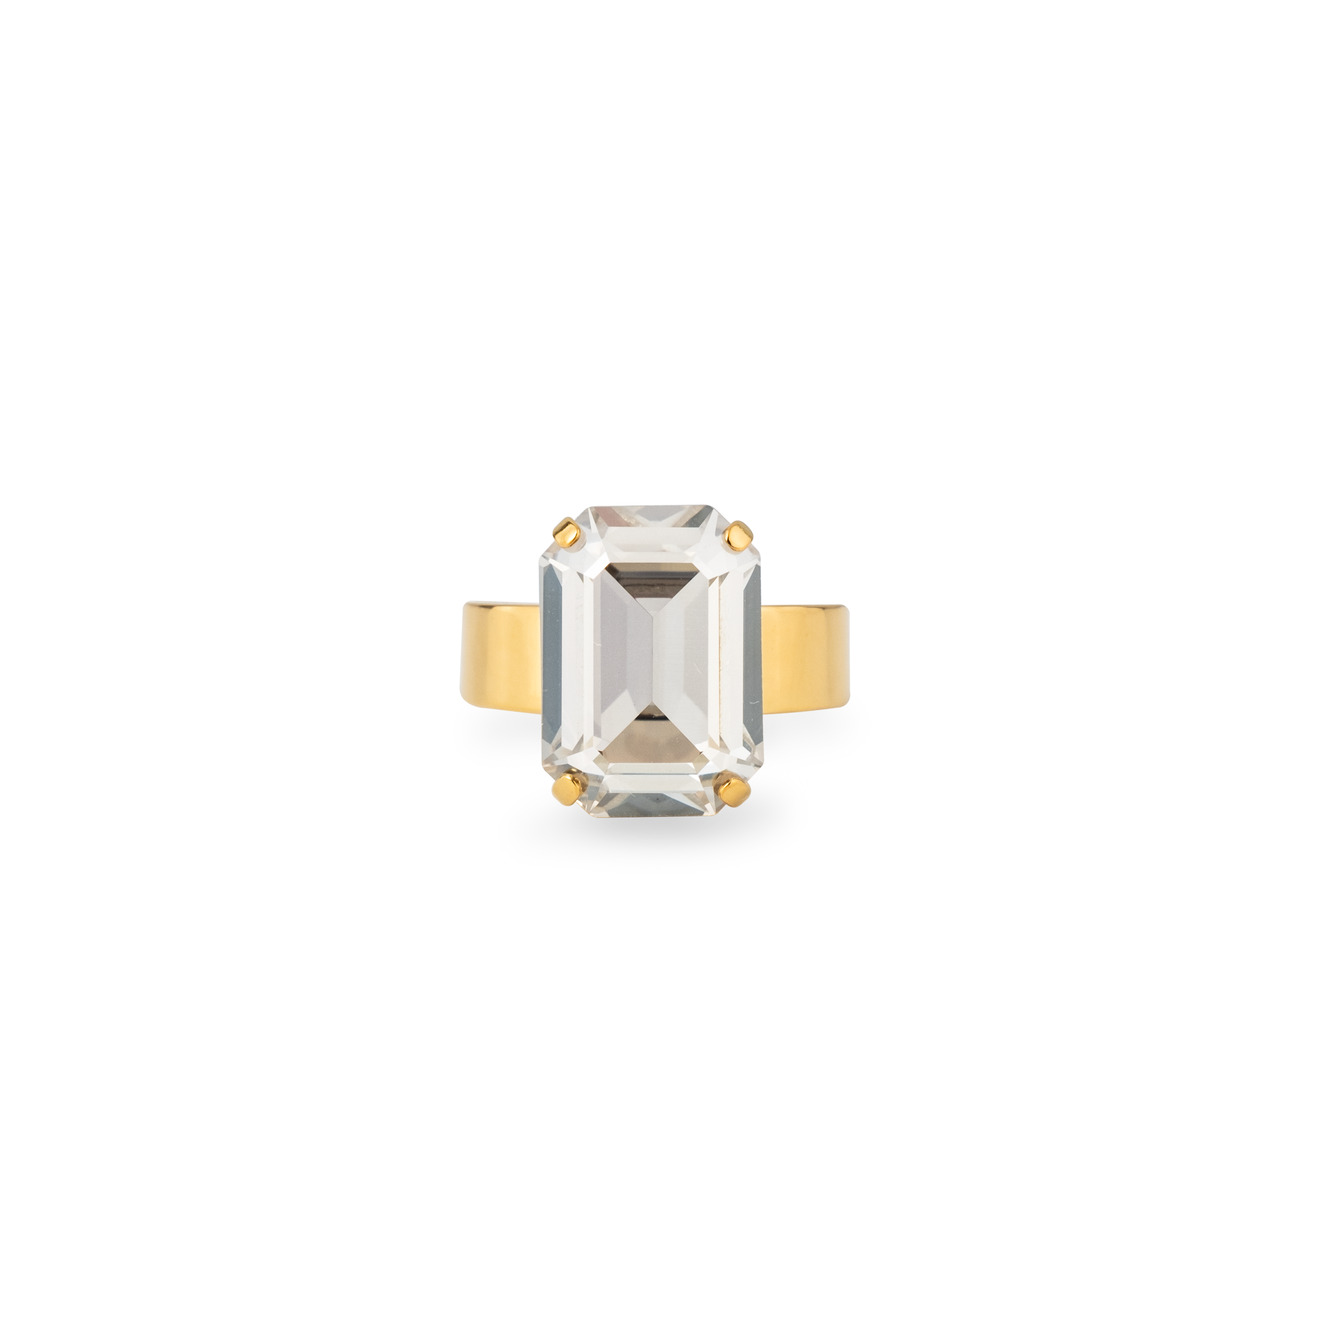 Phenomenal Studio Позолоченное кольцо с регулируемым размером Octagon Gold phenomenal studio позолоченное кольцо с кристаллами you are lucky gold